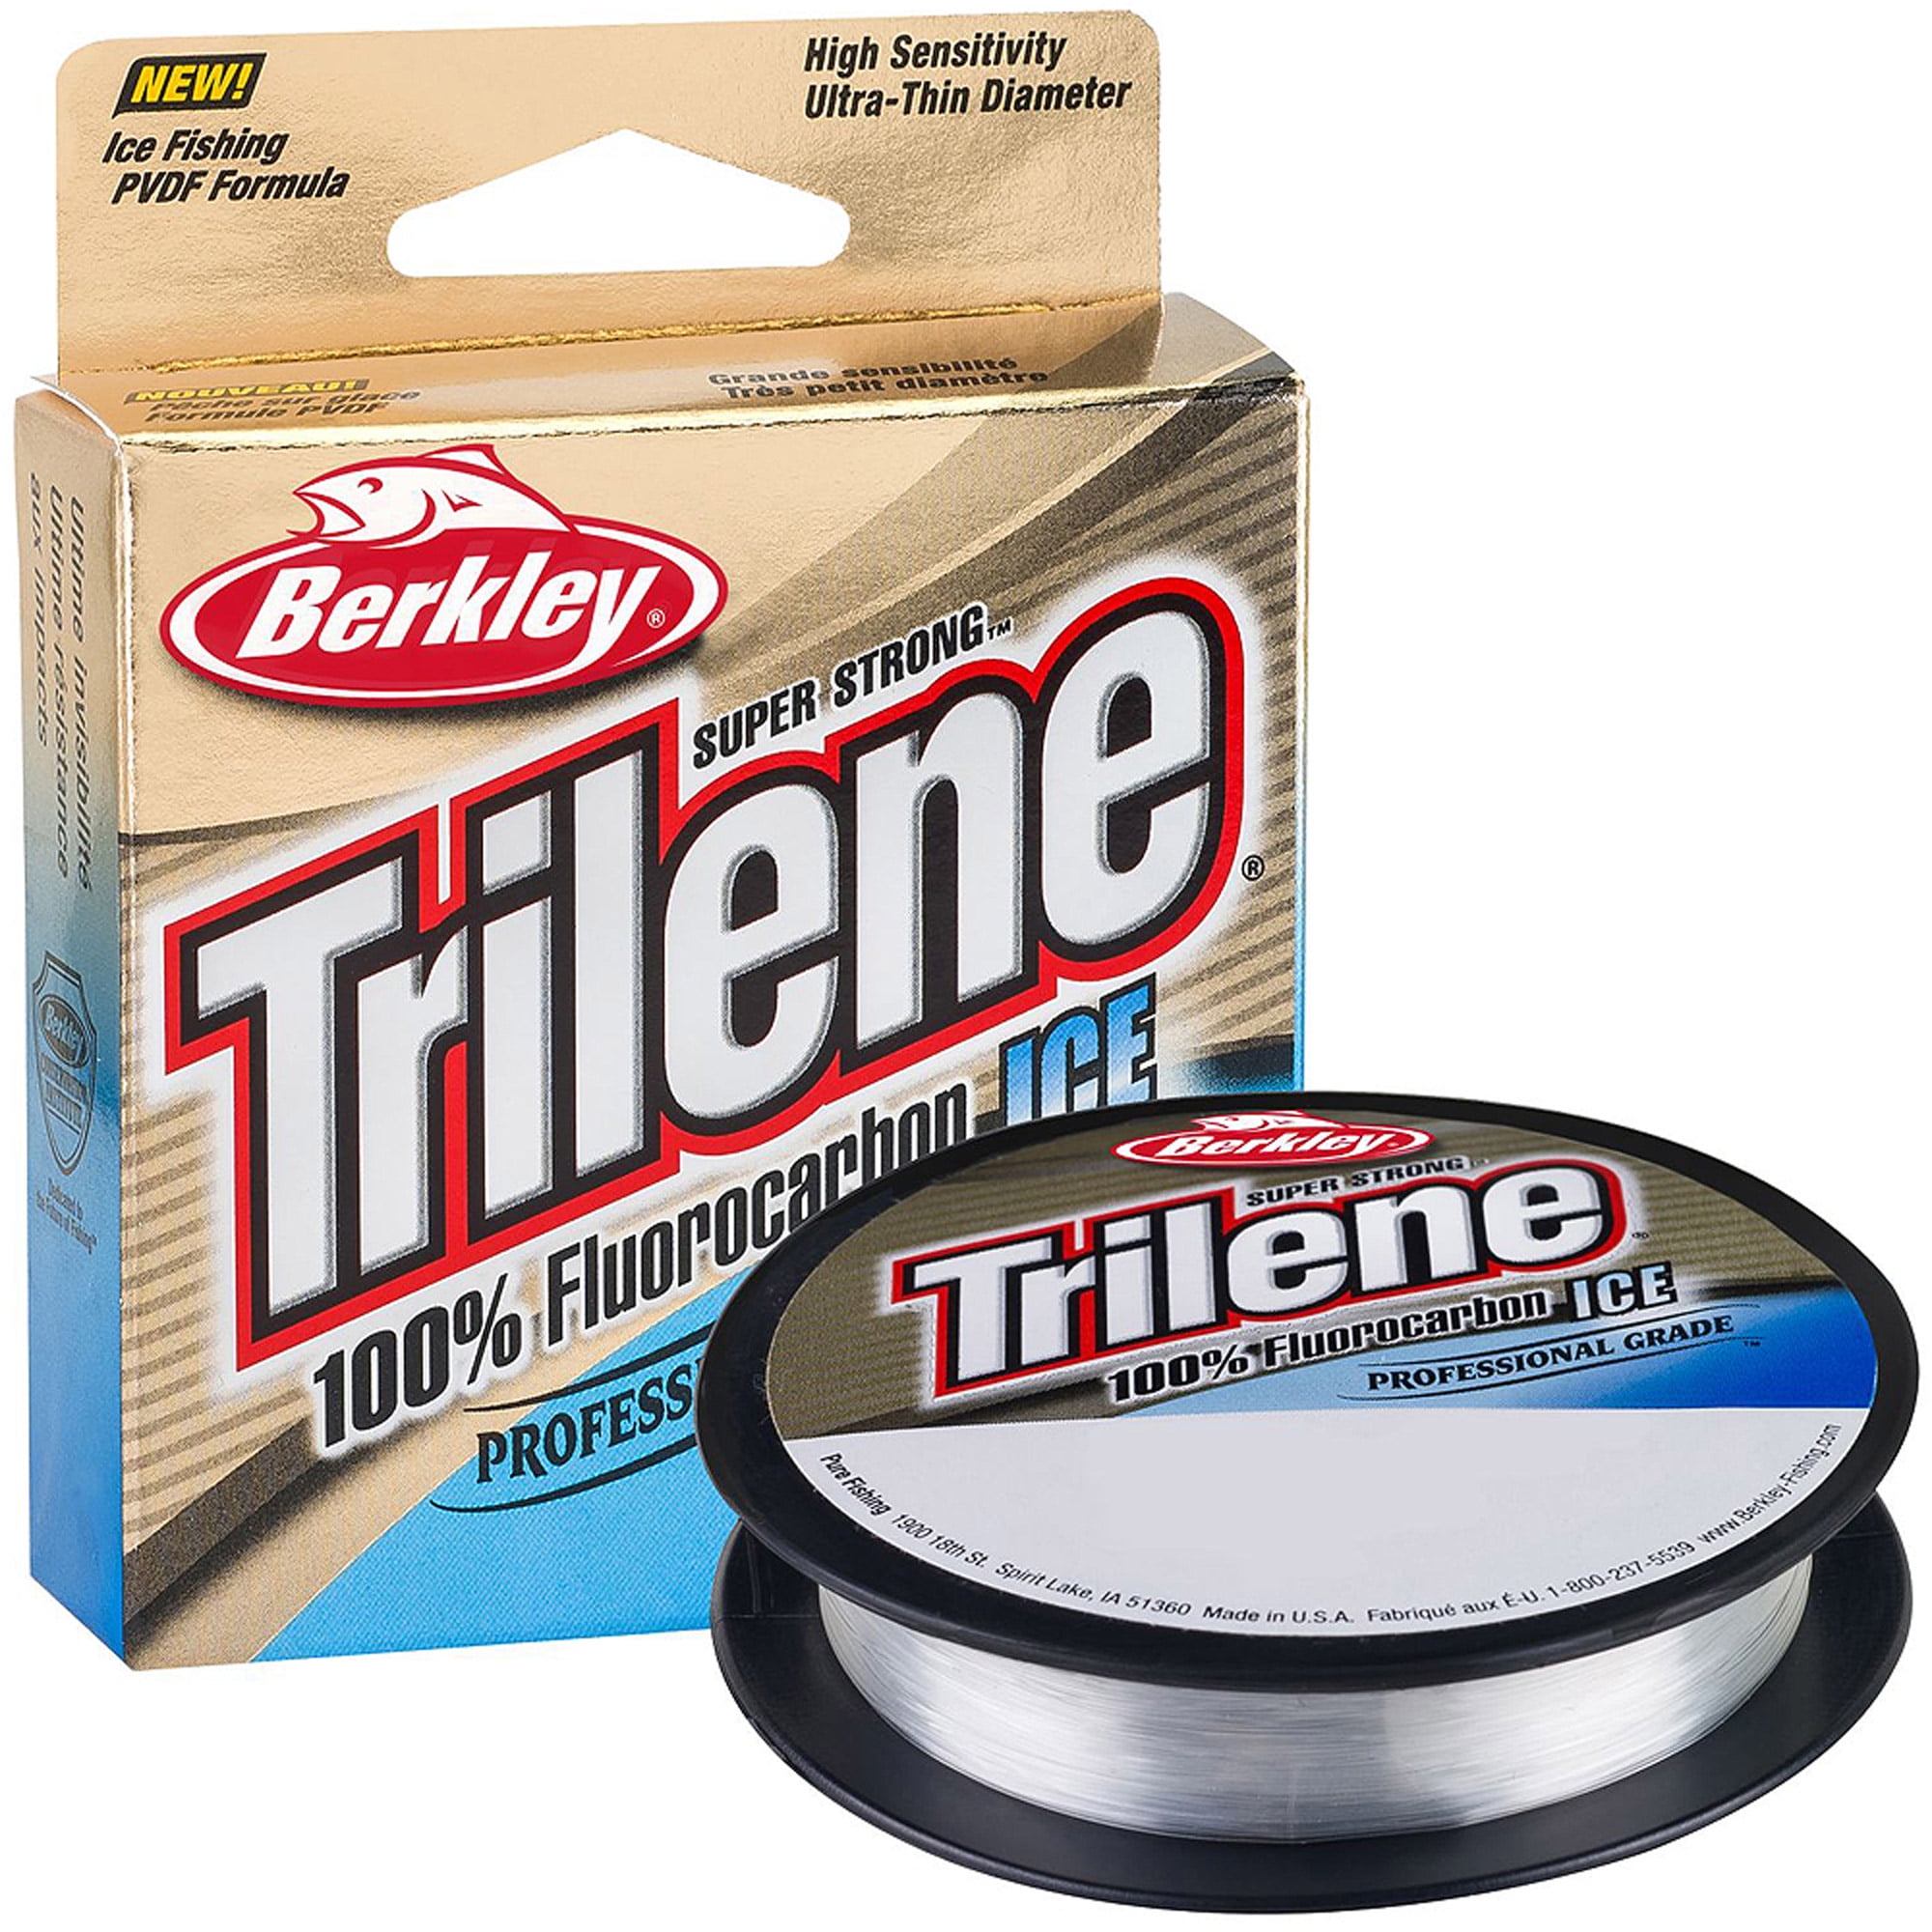 Berkley Trilene 100% Fluorocarbon Ice, Clear, 3-Pound Fishing Line 